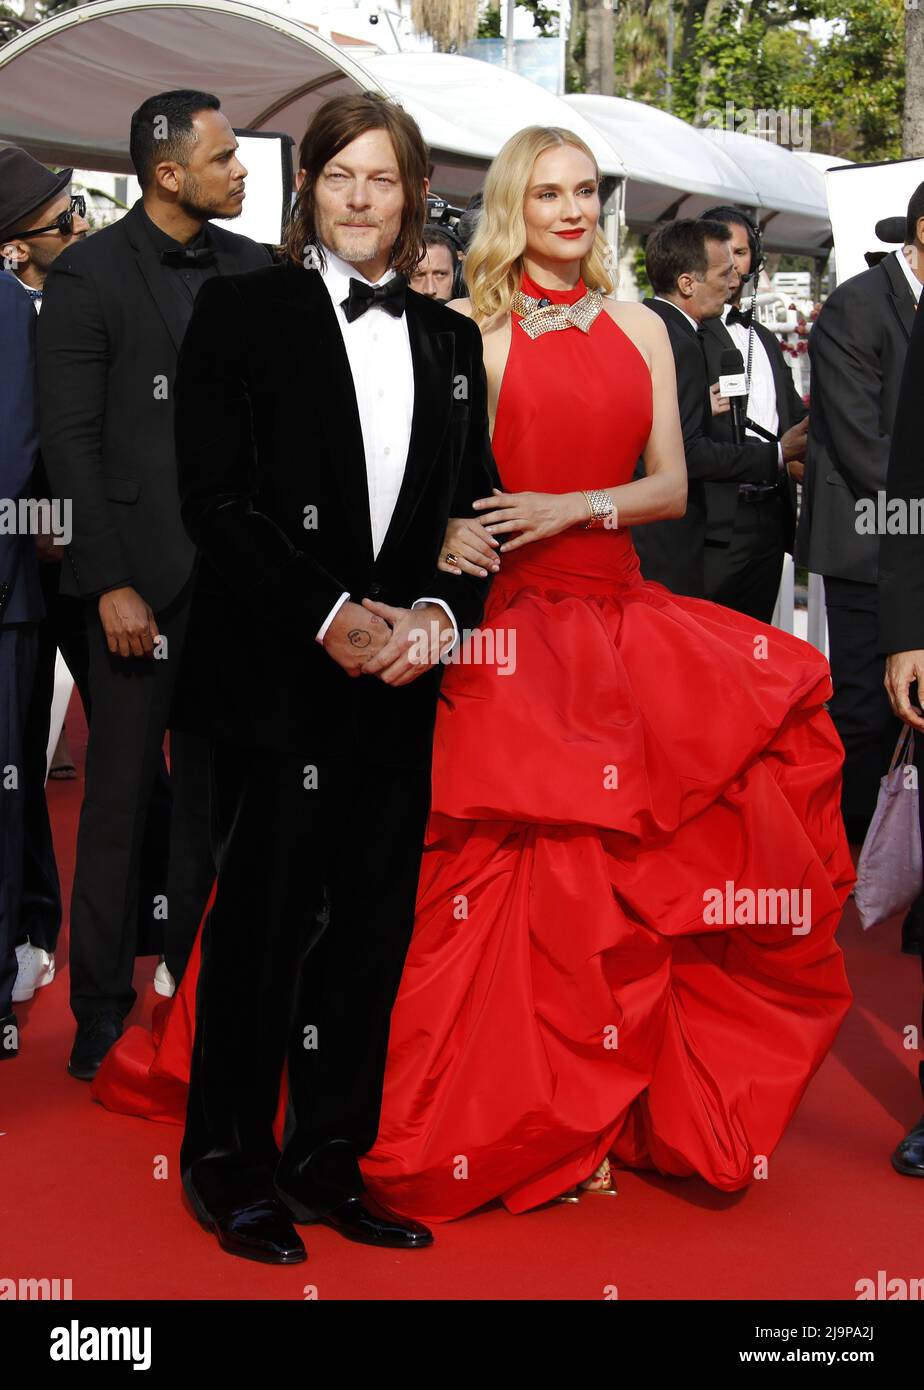 Diane Kruger Embodies Bridal Vibe in Red Carpet Photos With Norman Reedus -  Parade